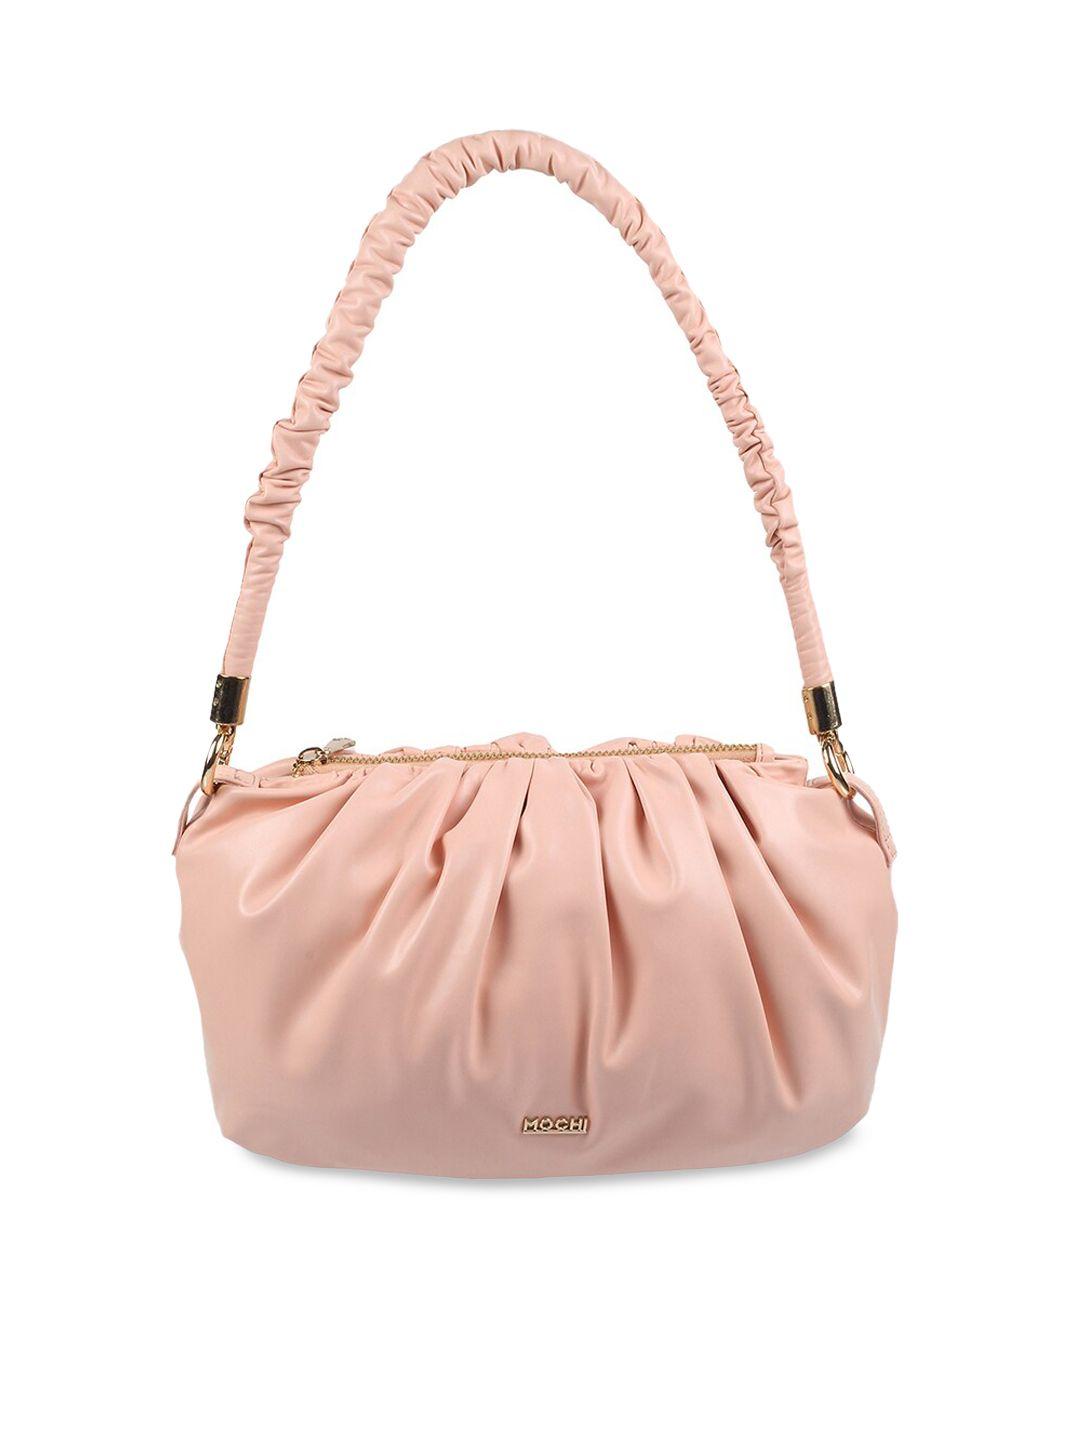 mochi women's pink pu structured shoulder bag with tasselled